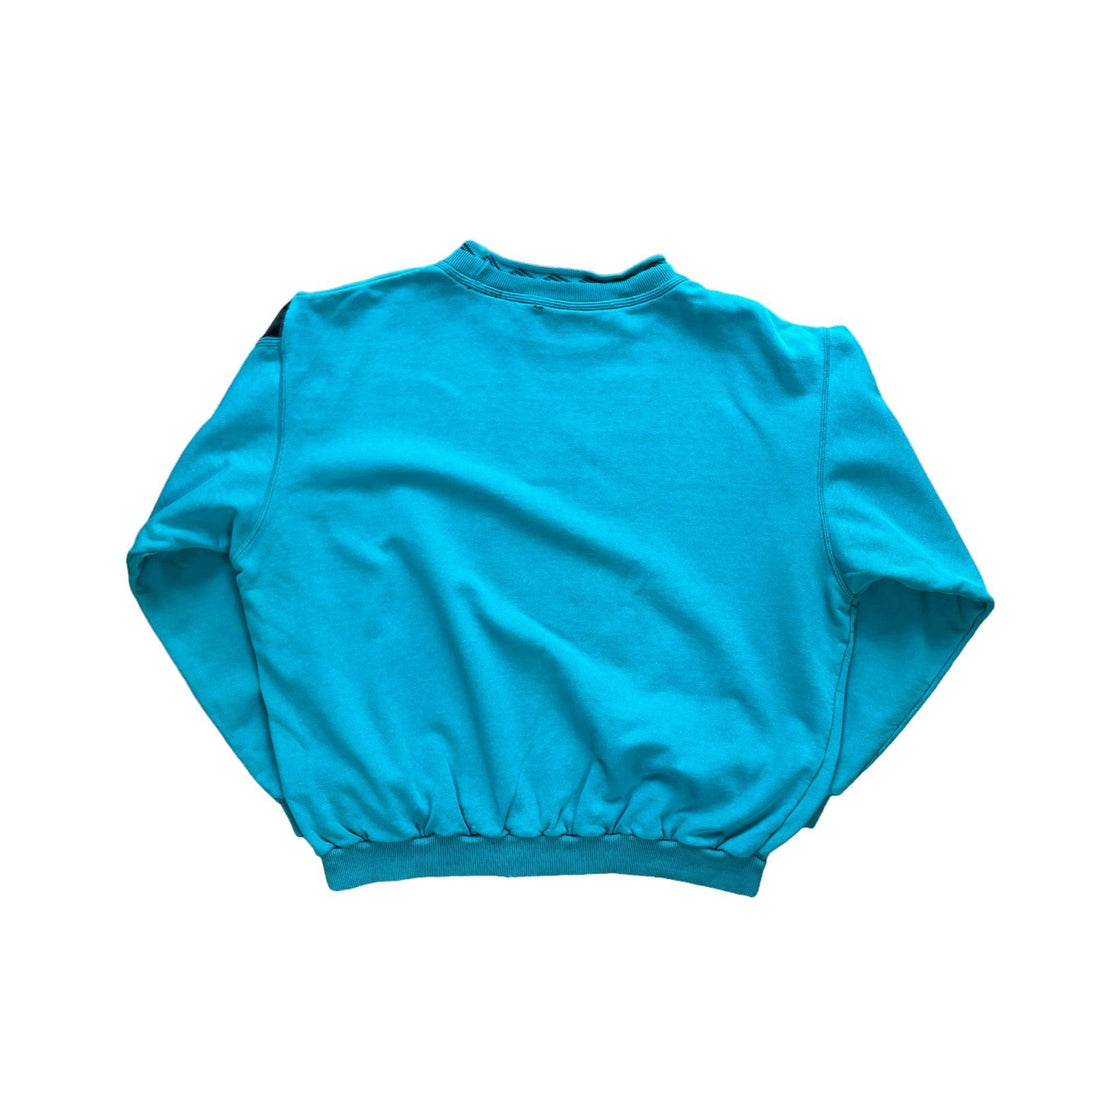 Vintage 90s Blue/ Green Adidas Equipment Sweatshirt - Large - The Streetwear Studio